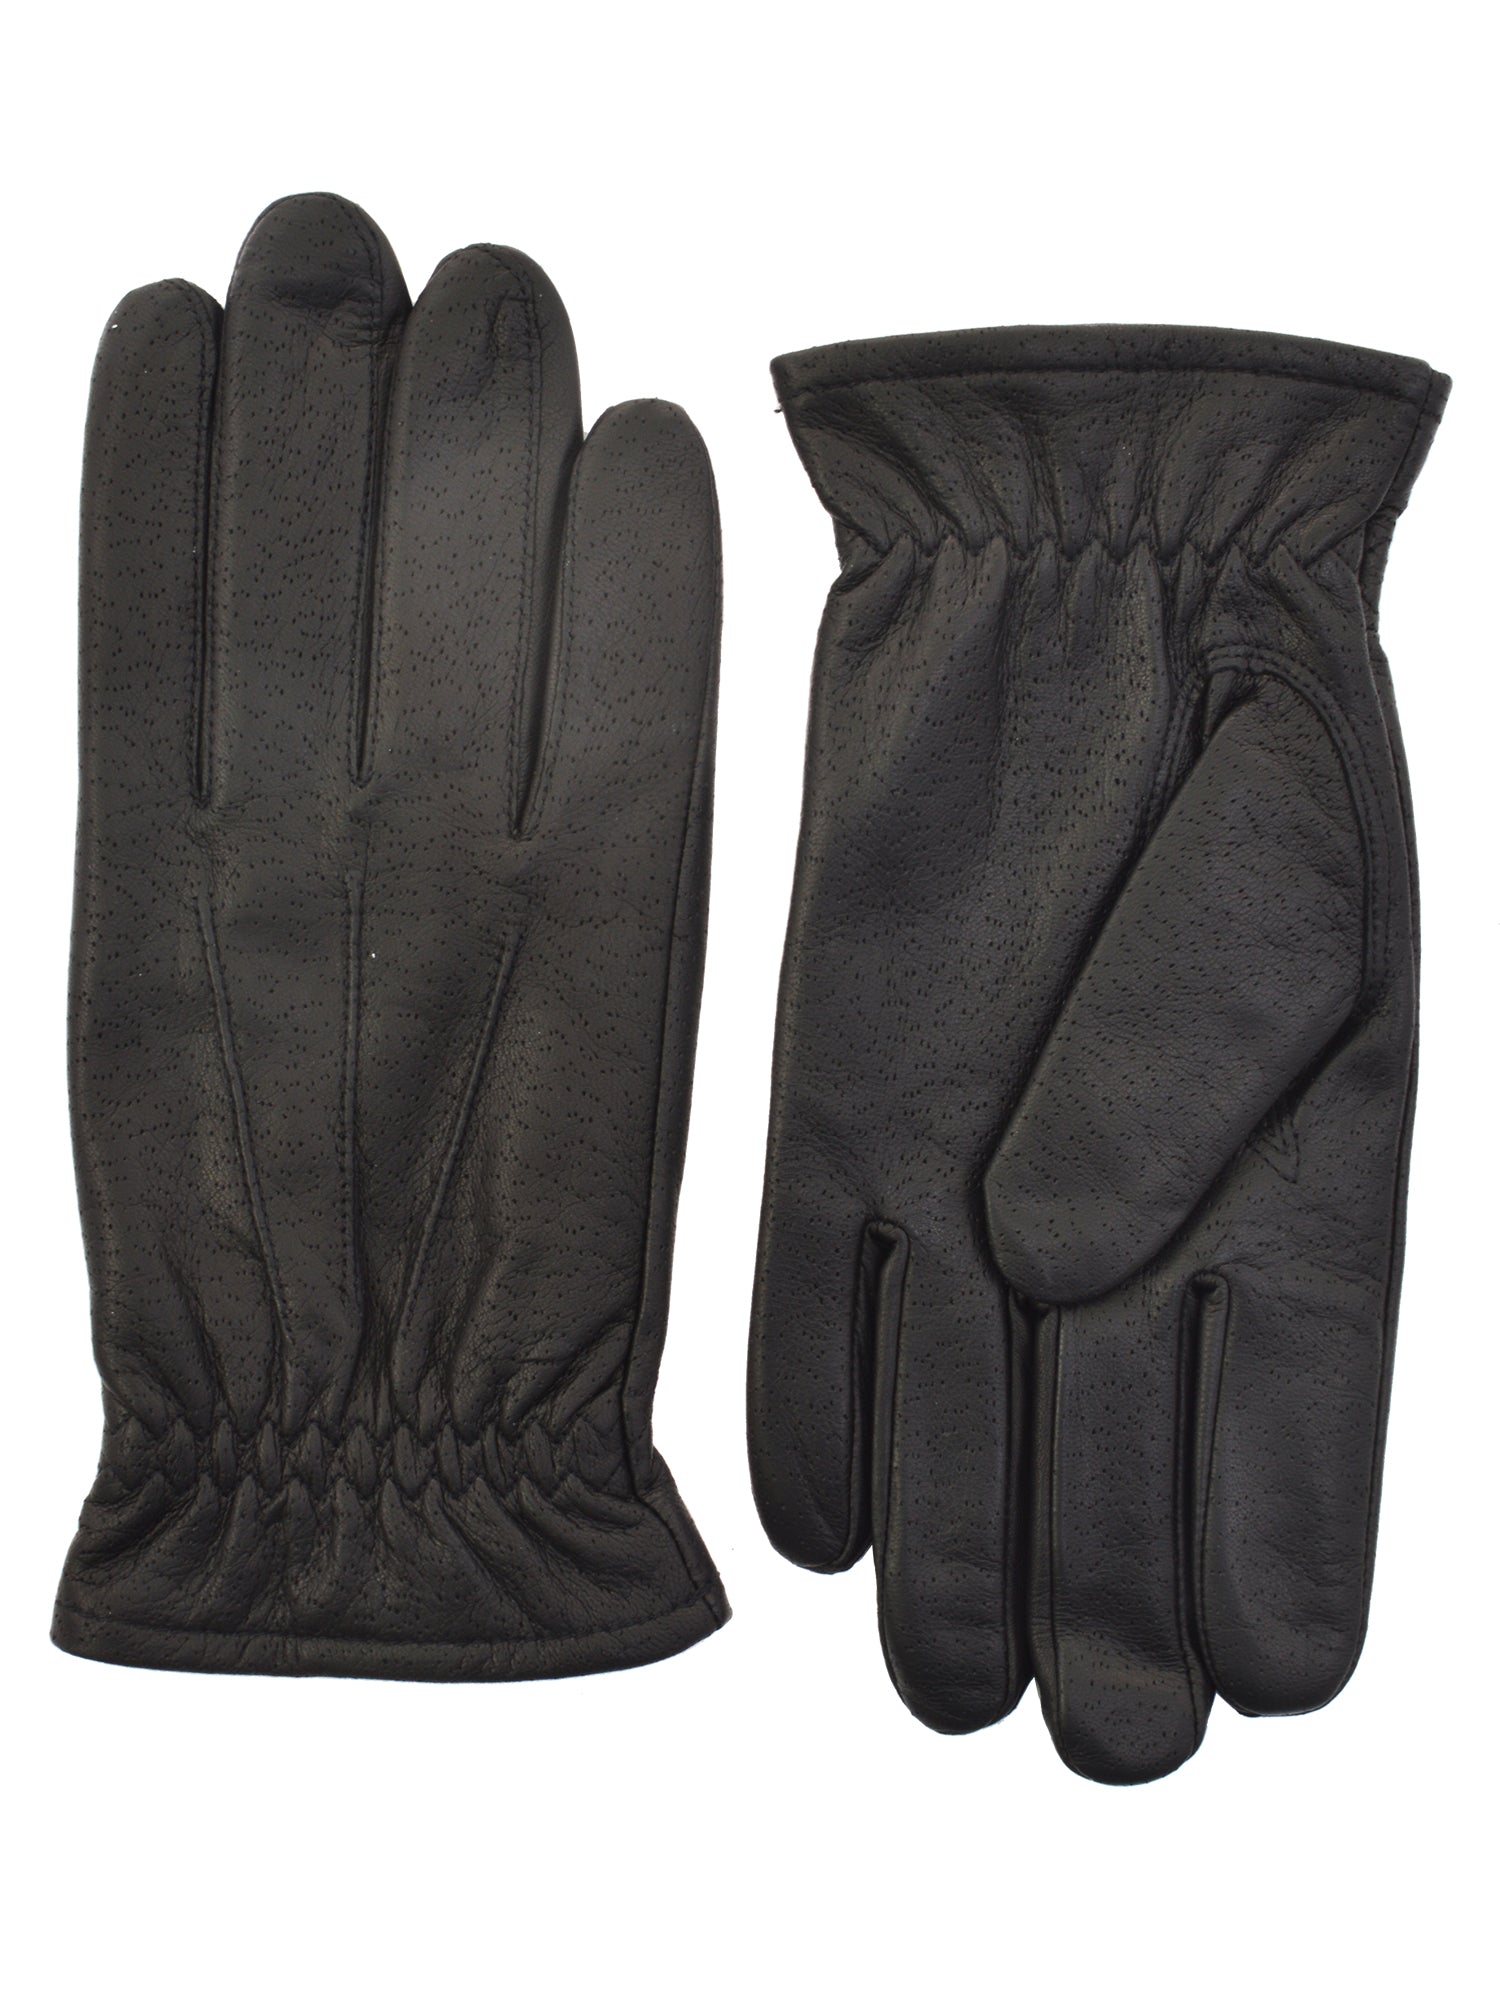 Lauer Men's Deerskin Leather Gloves in Black - 1437-BLK